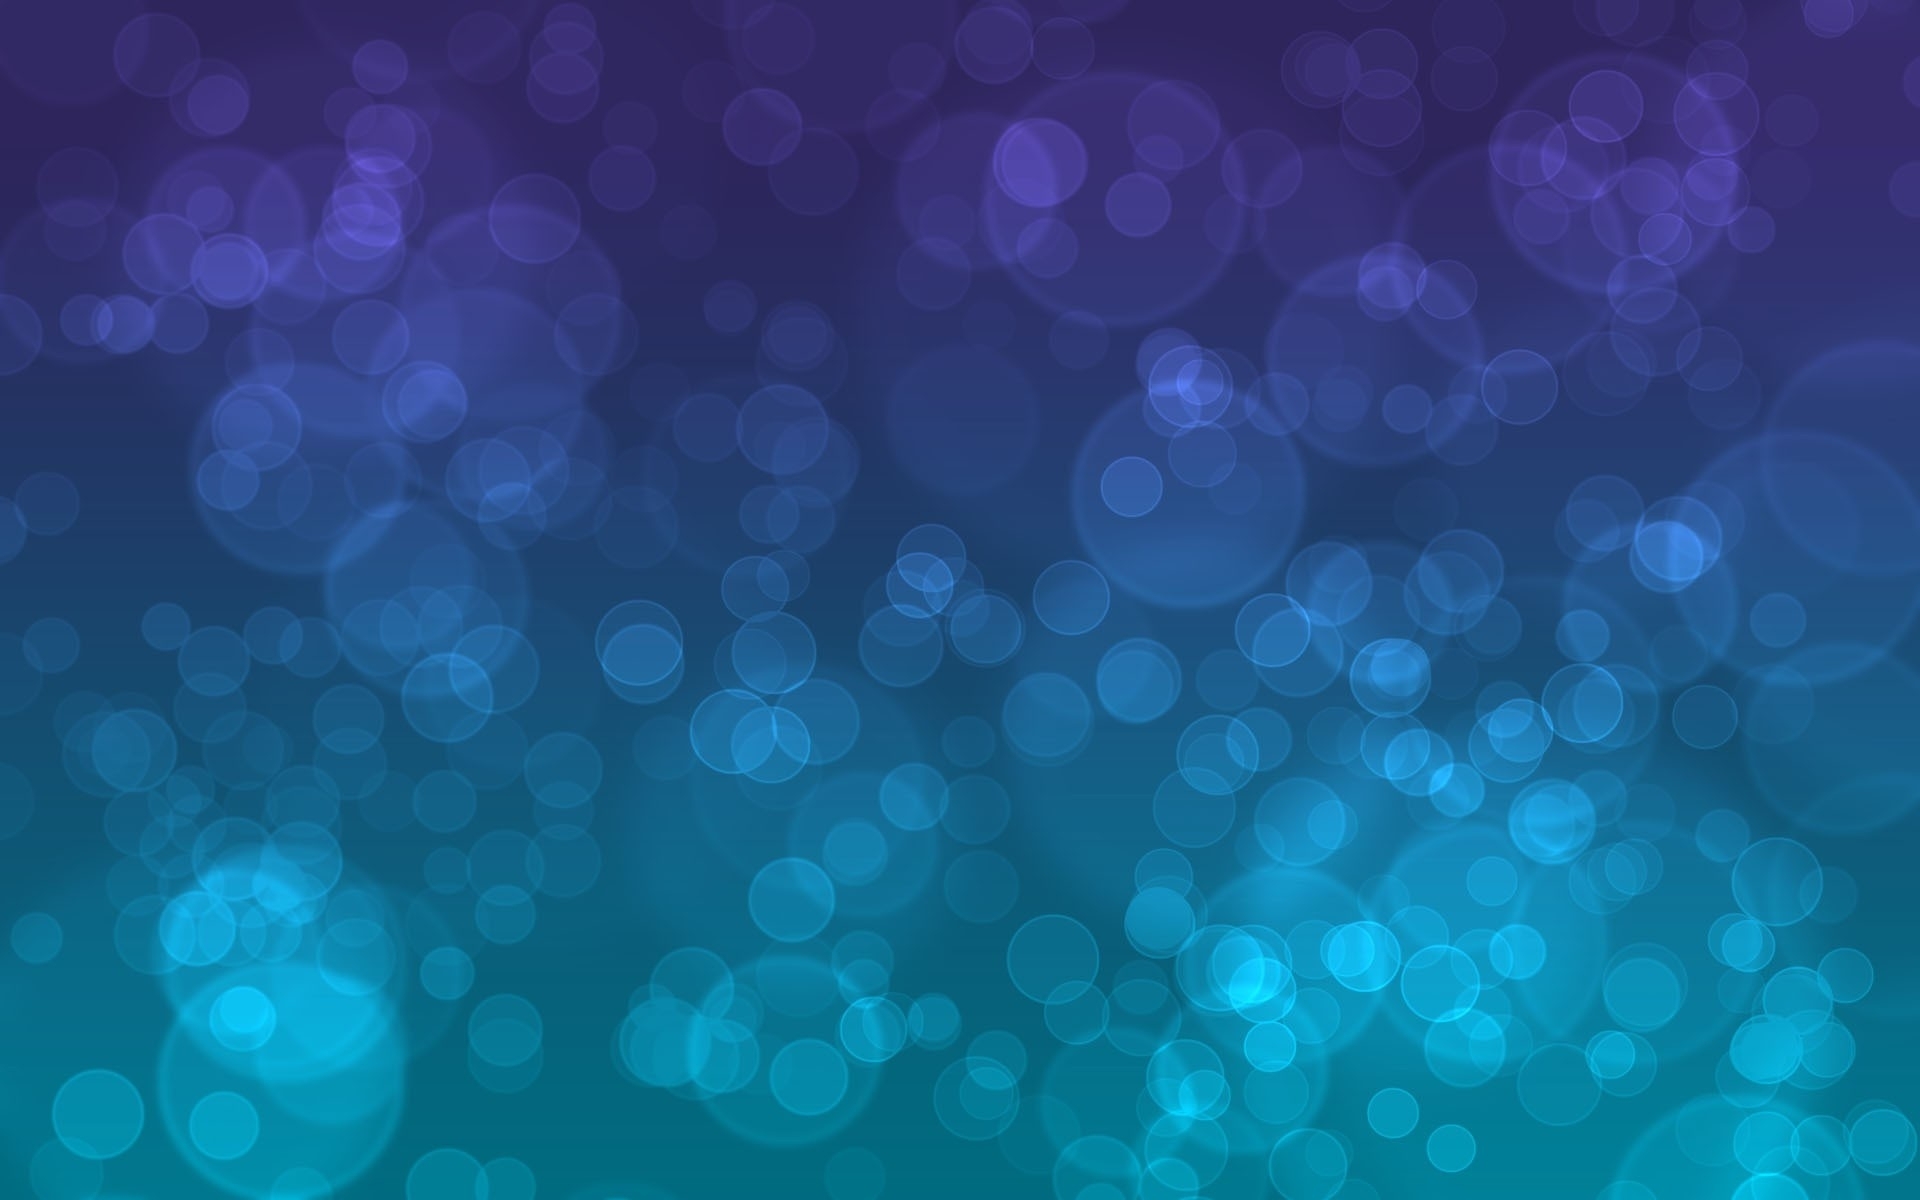 purple and blue bubbles backgrounds